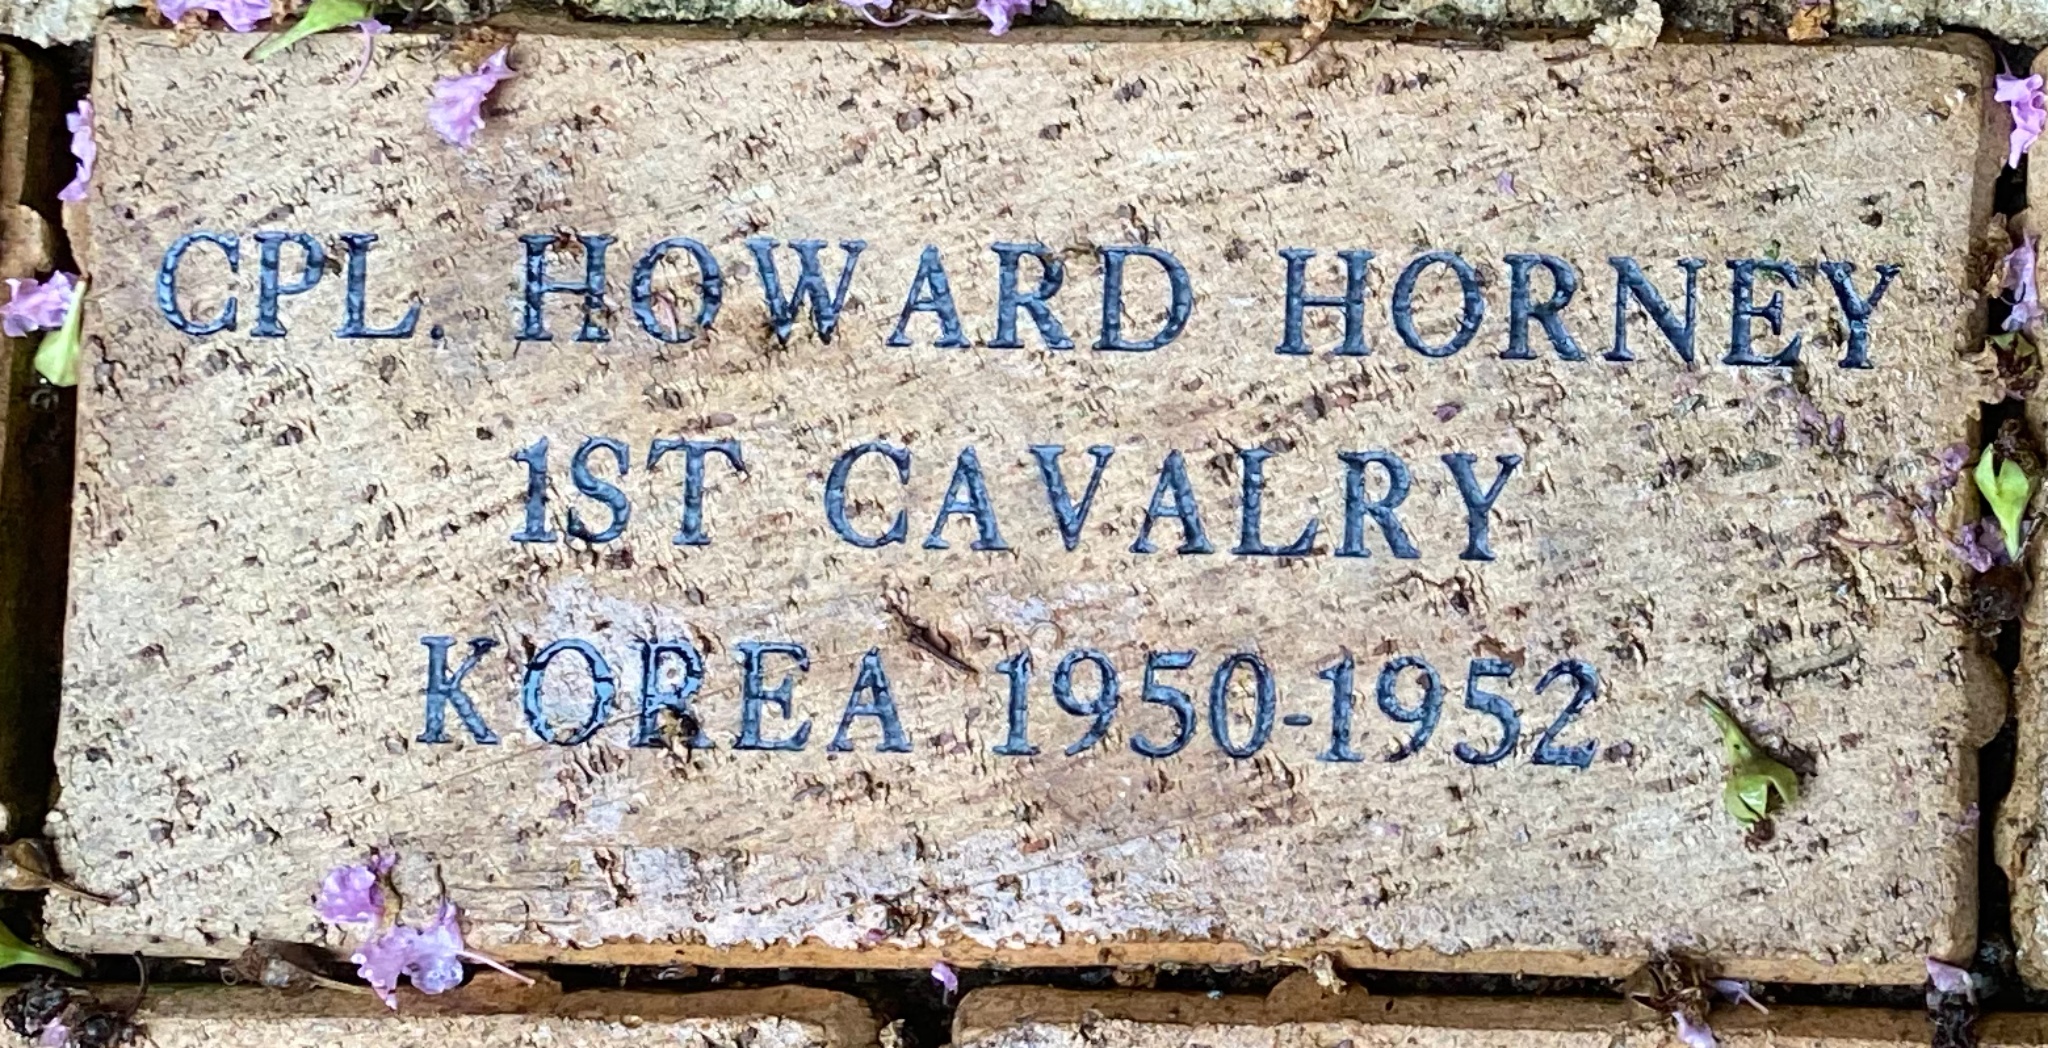 CPL. HOWARD HORNEY 1ST CAVALRY KOREA 1950-1952